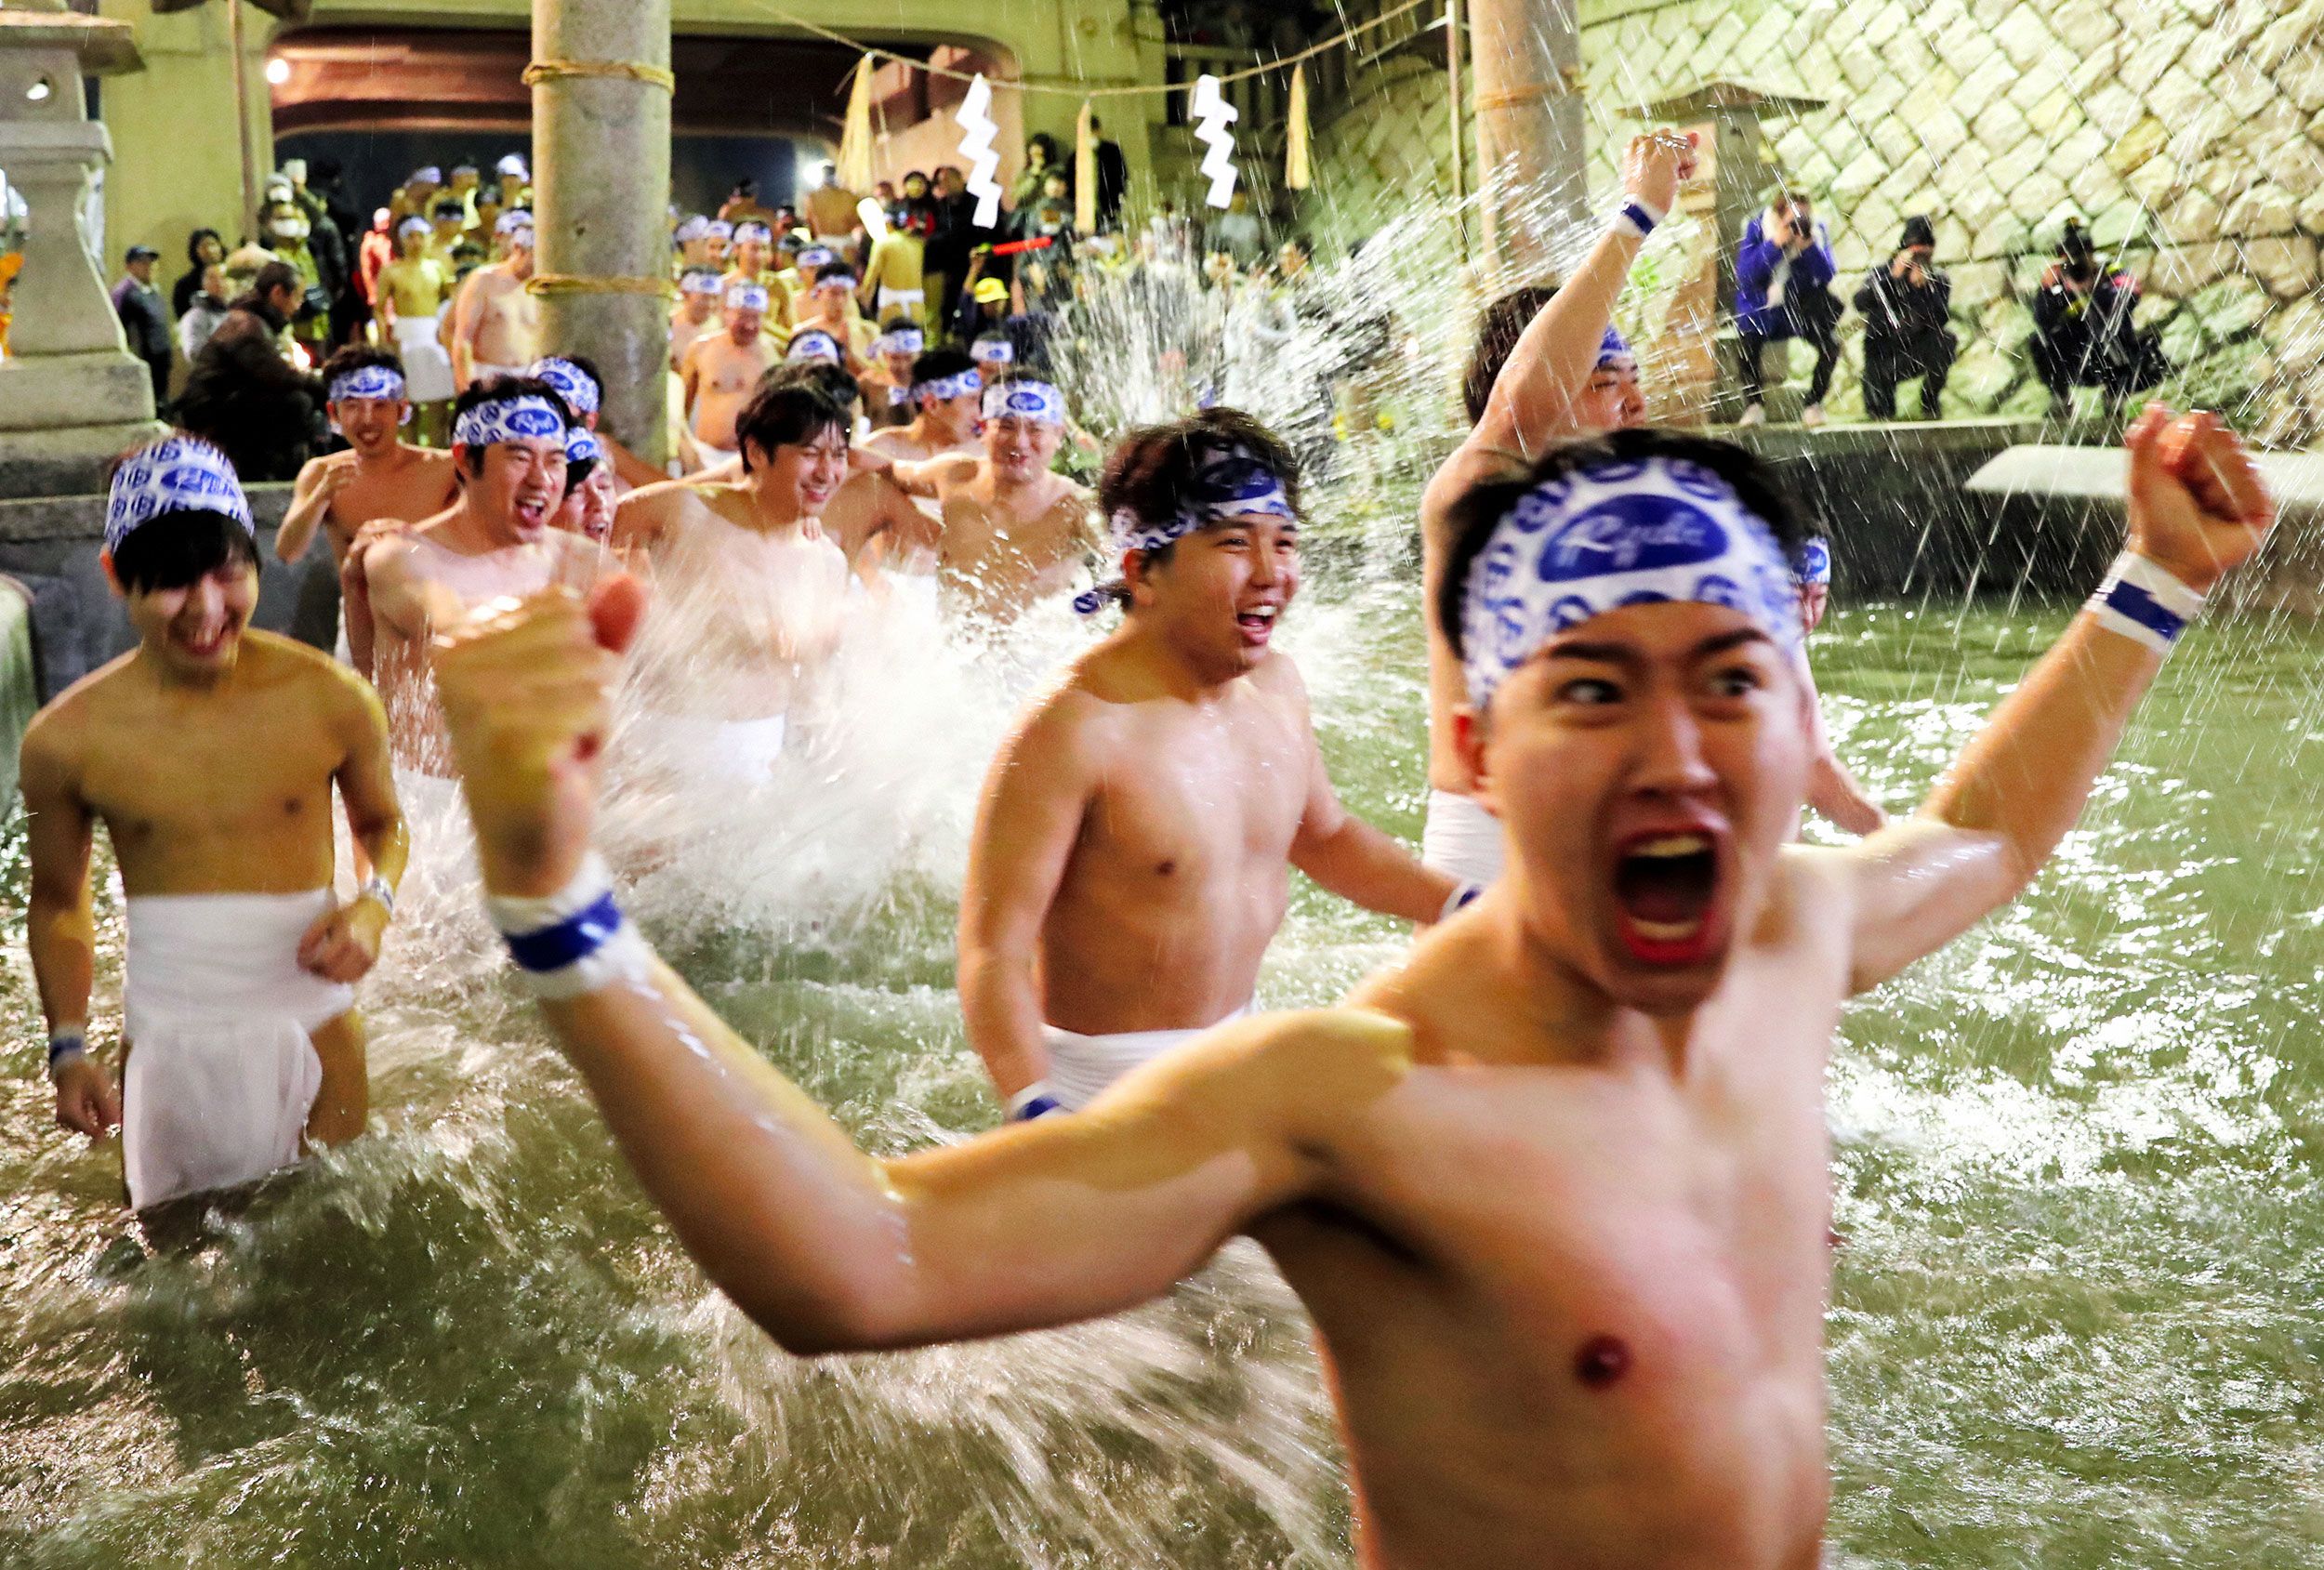 Japanese 16 Nude - Naked Festival: Thousands gather for Japan's annual 'Hadaka Matsuri' | CNN